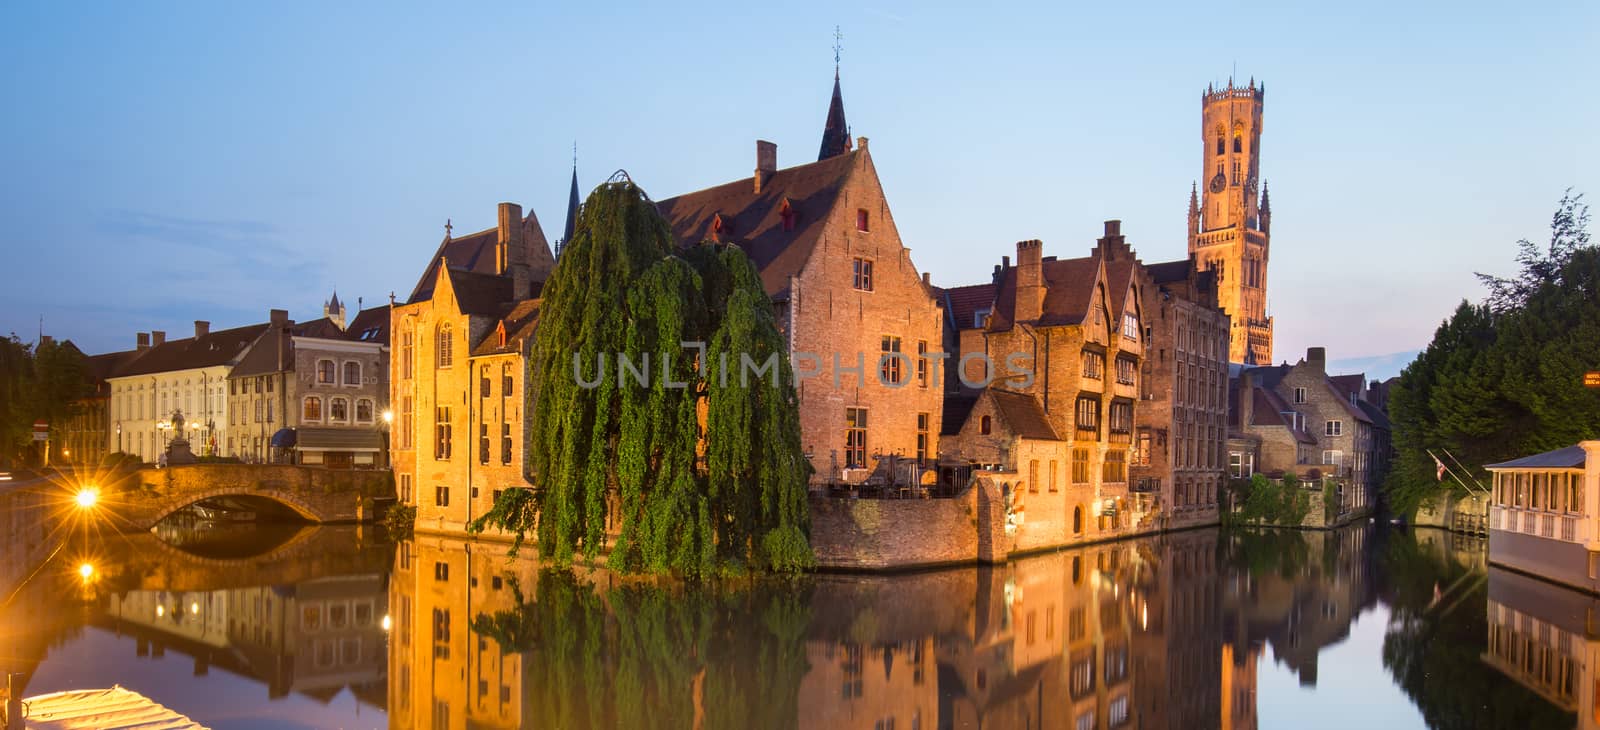 Panorama of Bruges, Belgium. Image with Rozenhoedkaai in Brugge, Dijver river canal and Belfort, Belfry, tower in twilight.